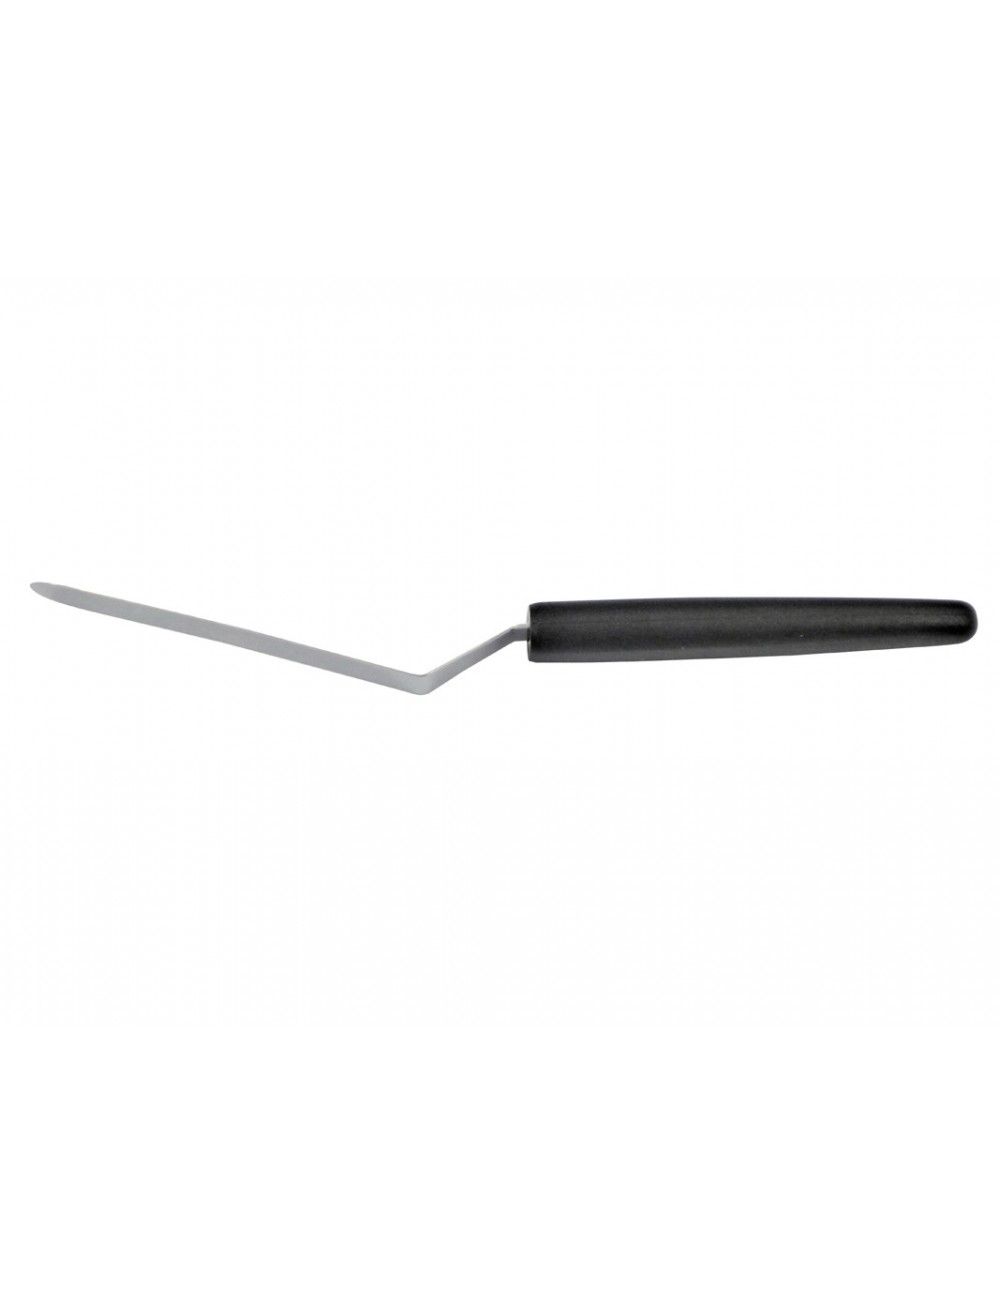 https://www.edehillerin.fr/3652-large_default/mini-spatule-coudee-9-cm.jpg